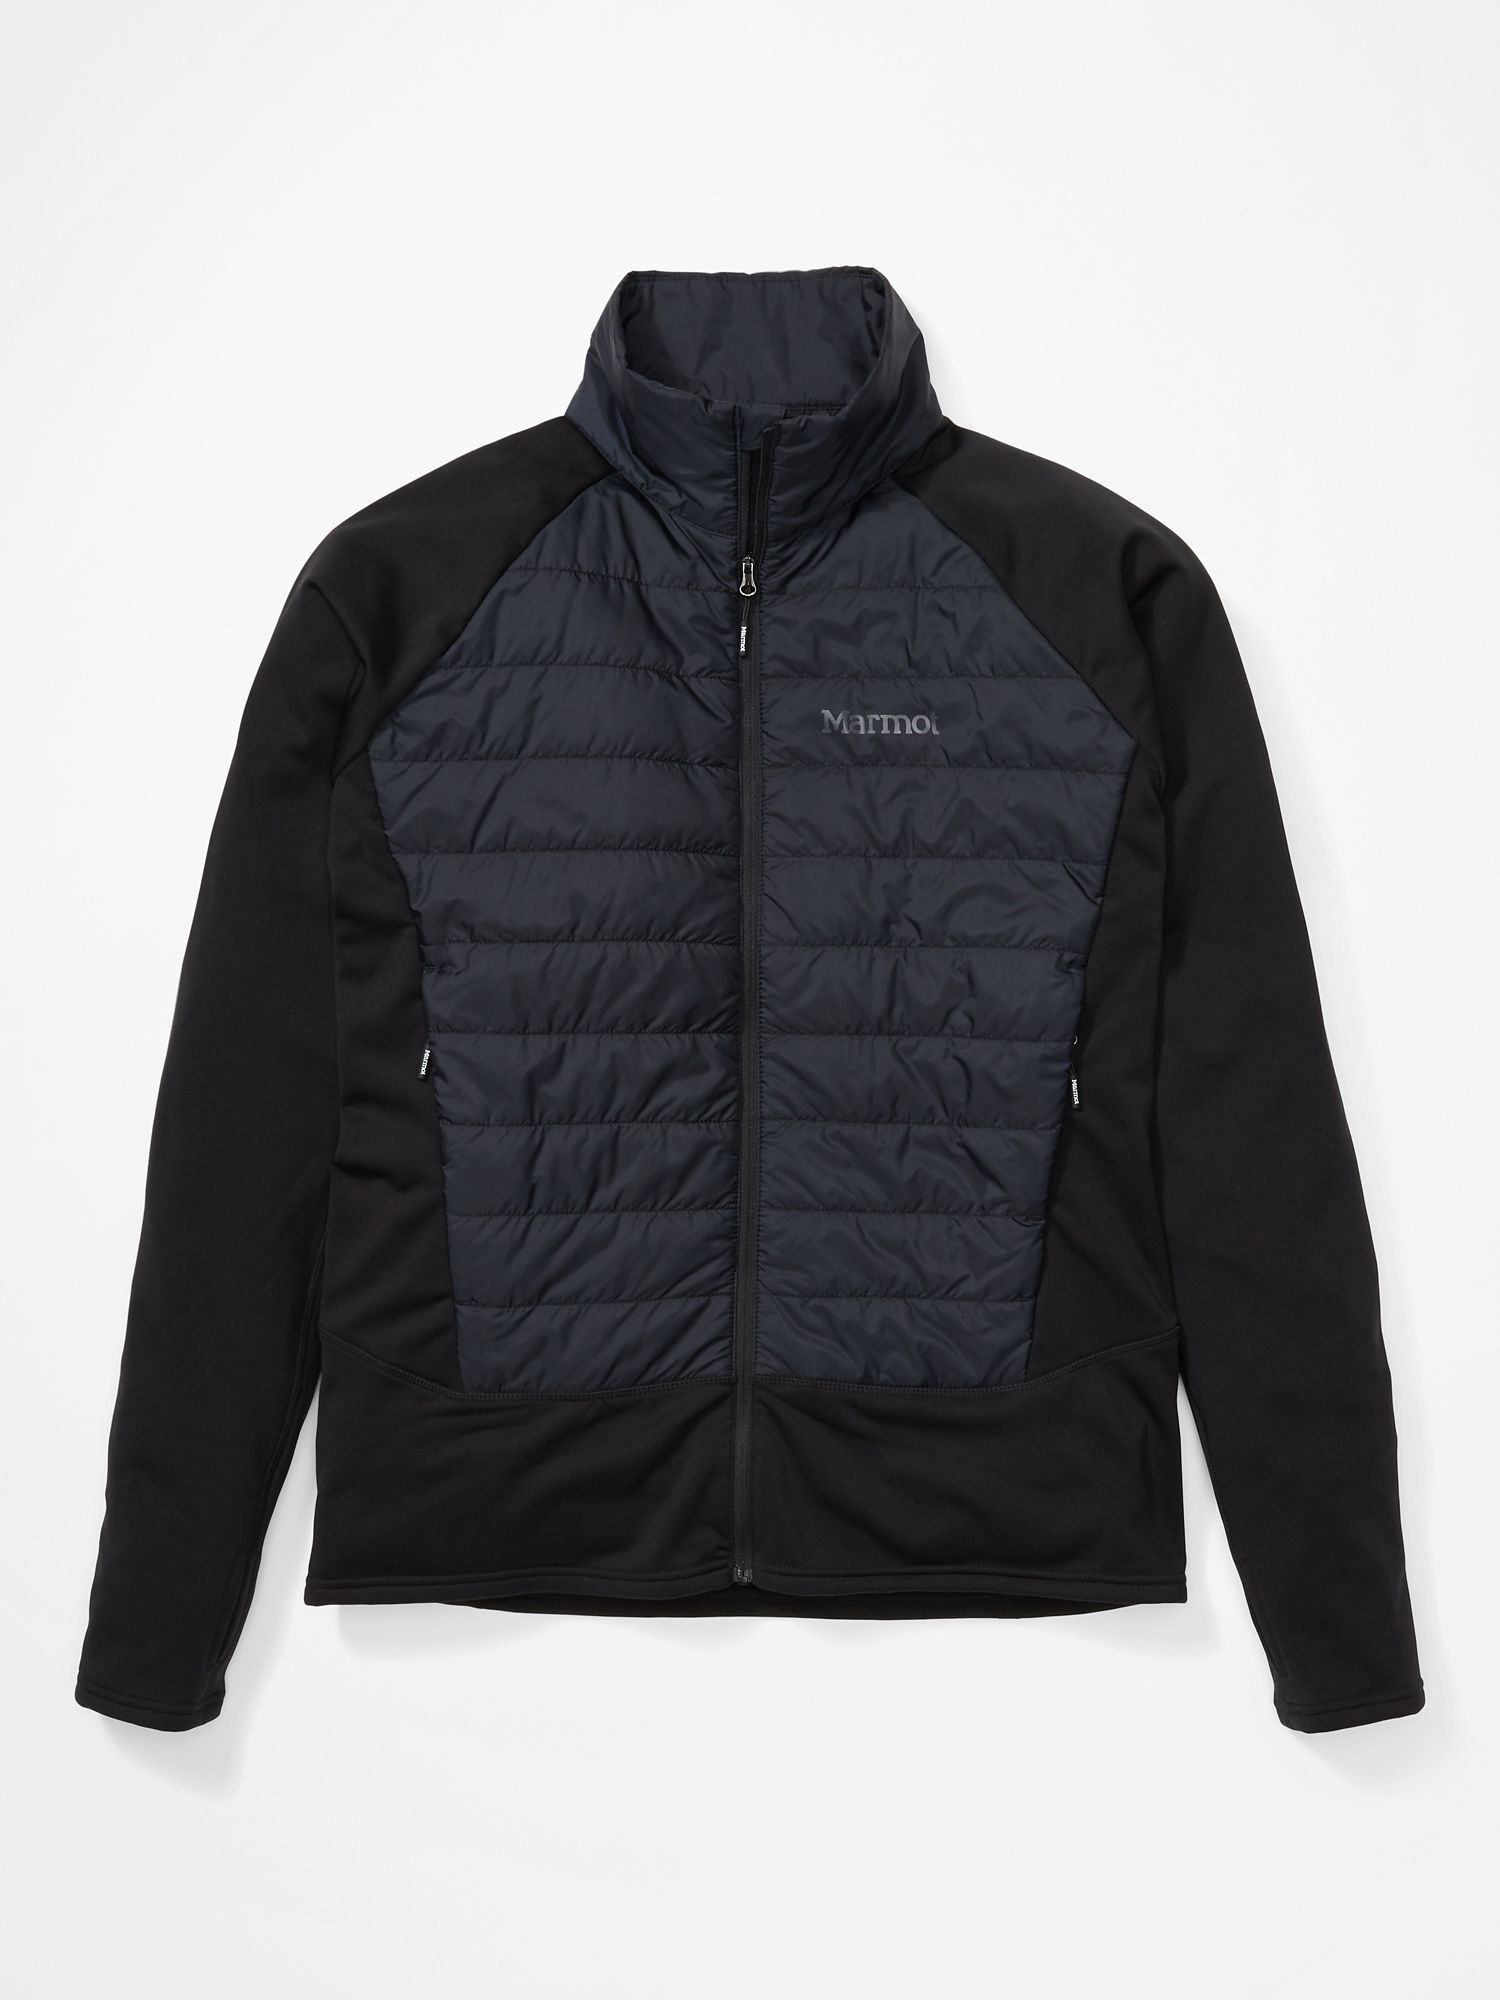 Marmot Variant Hybrid Jacket - Giacca softshell - Uomo